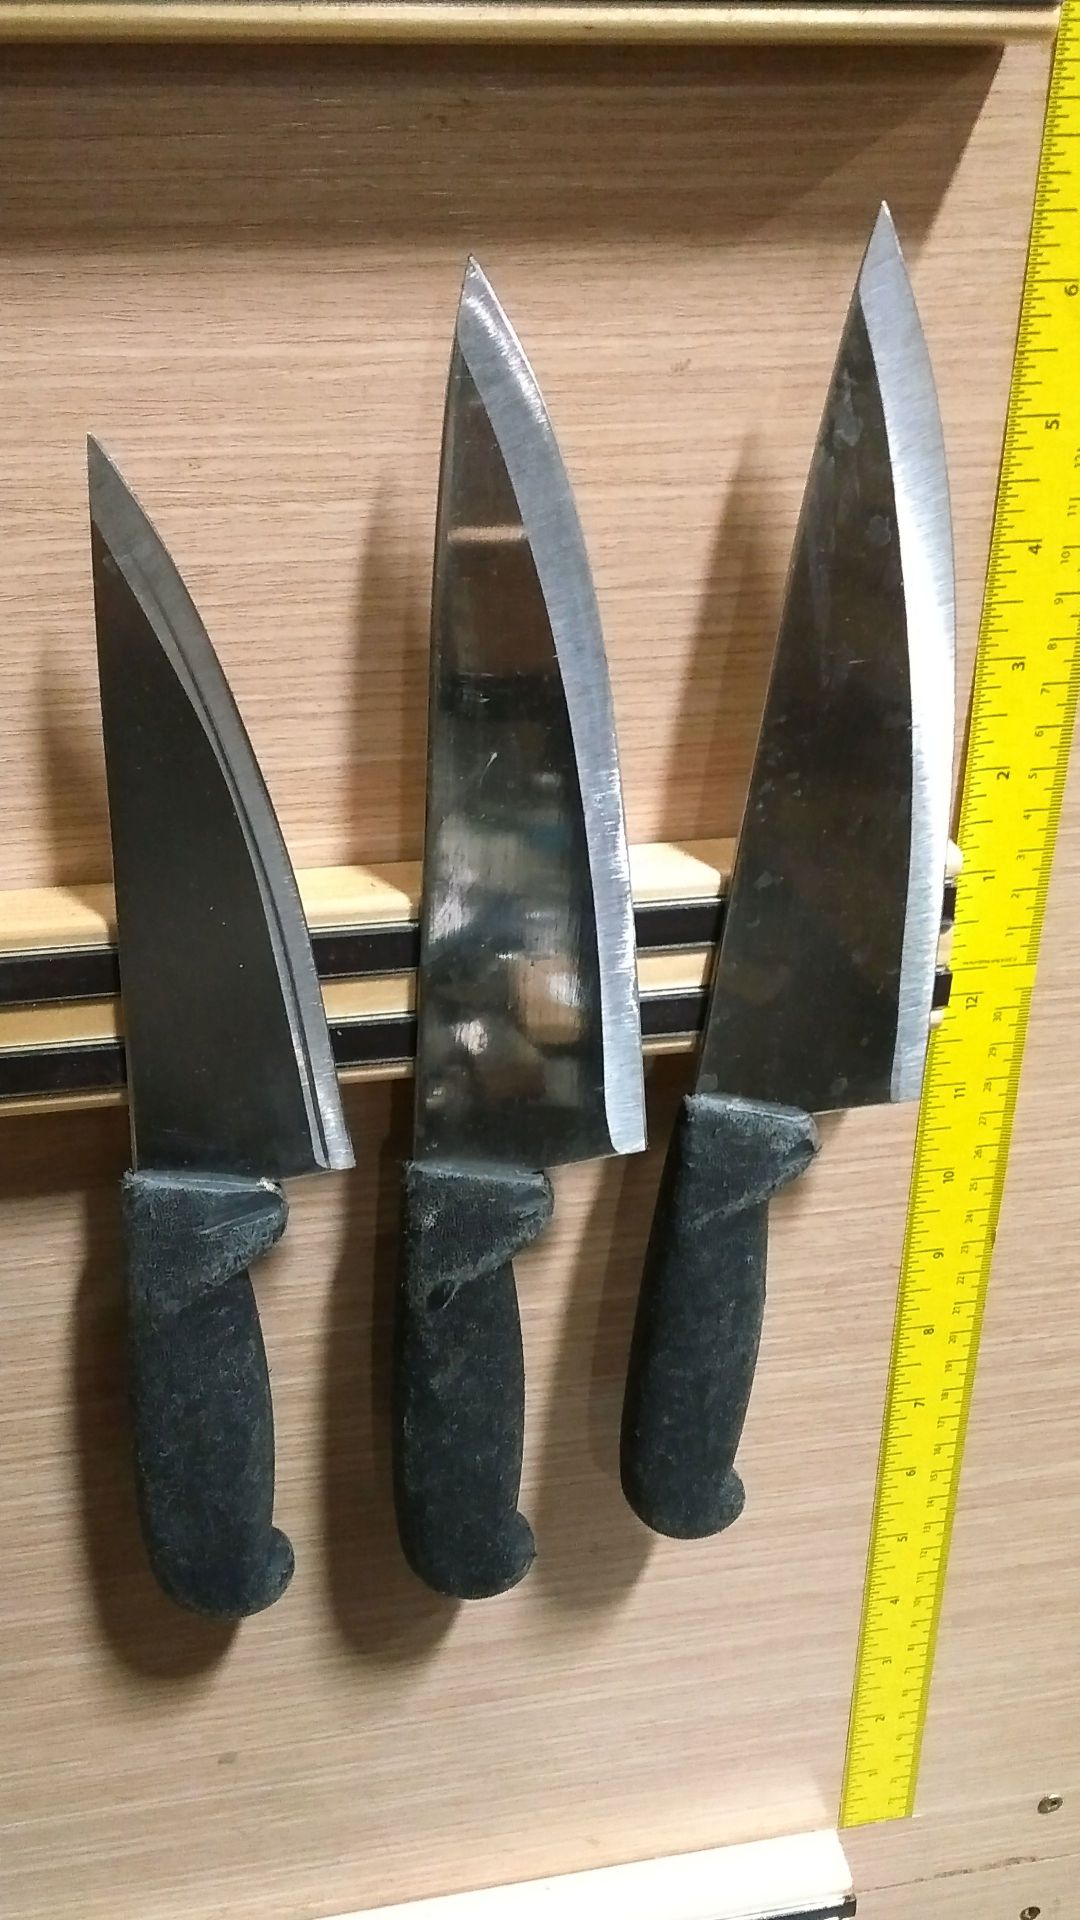 Black Used/Sharpened Knives - Lot of 3